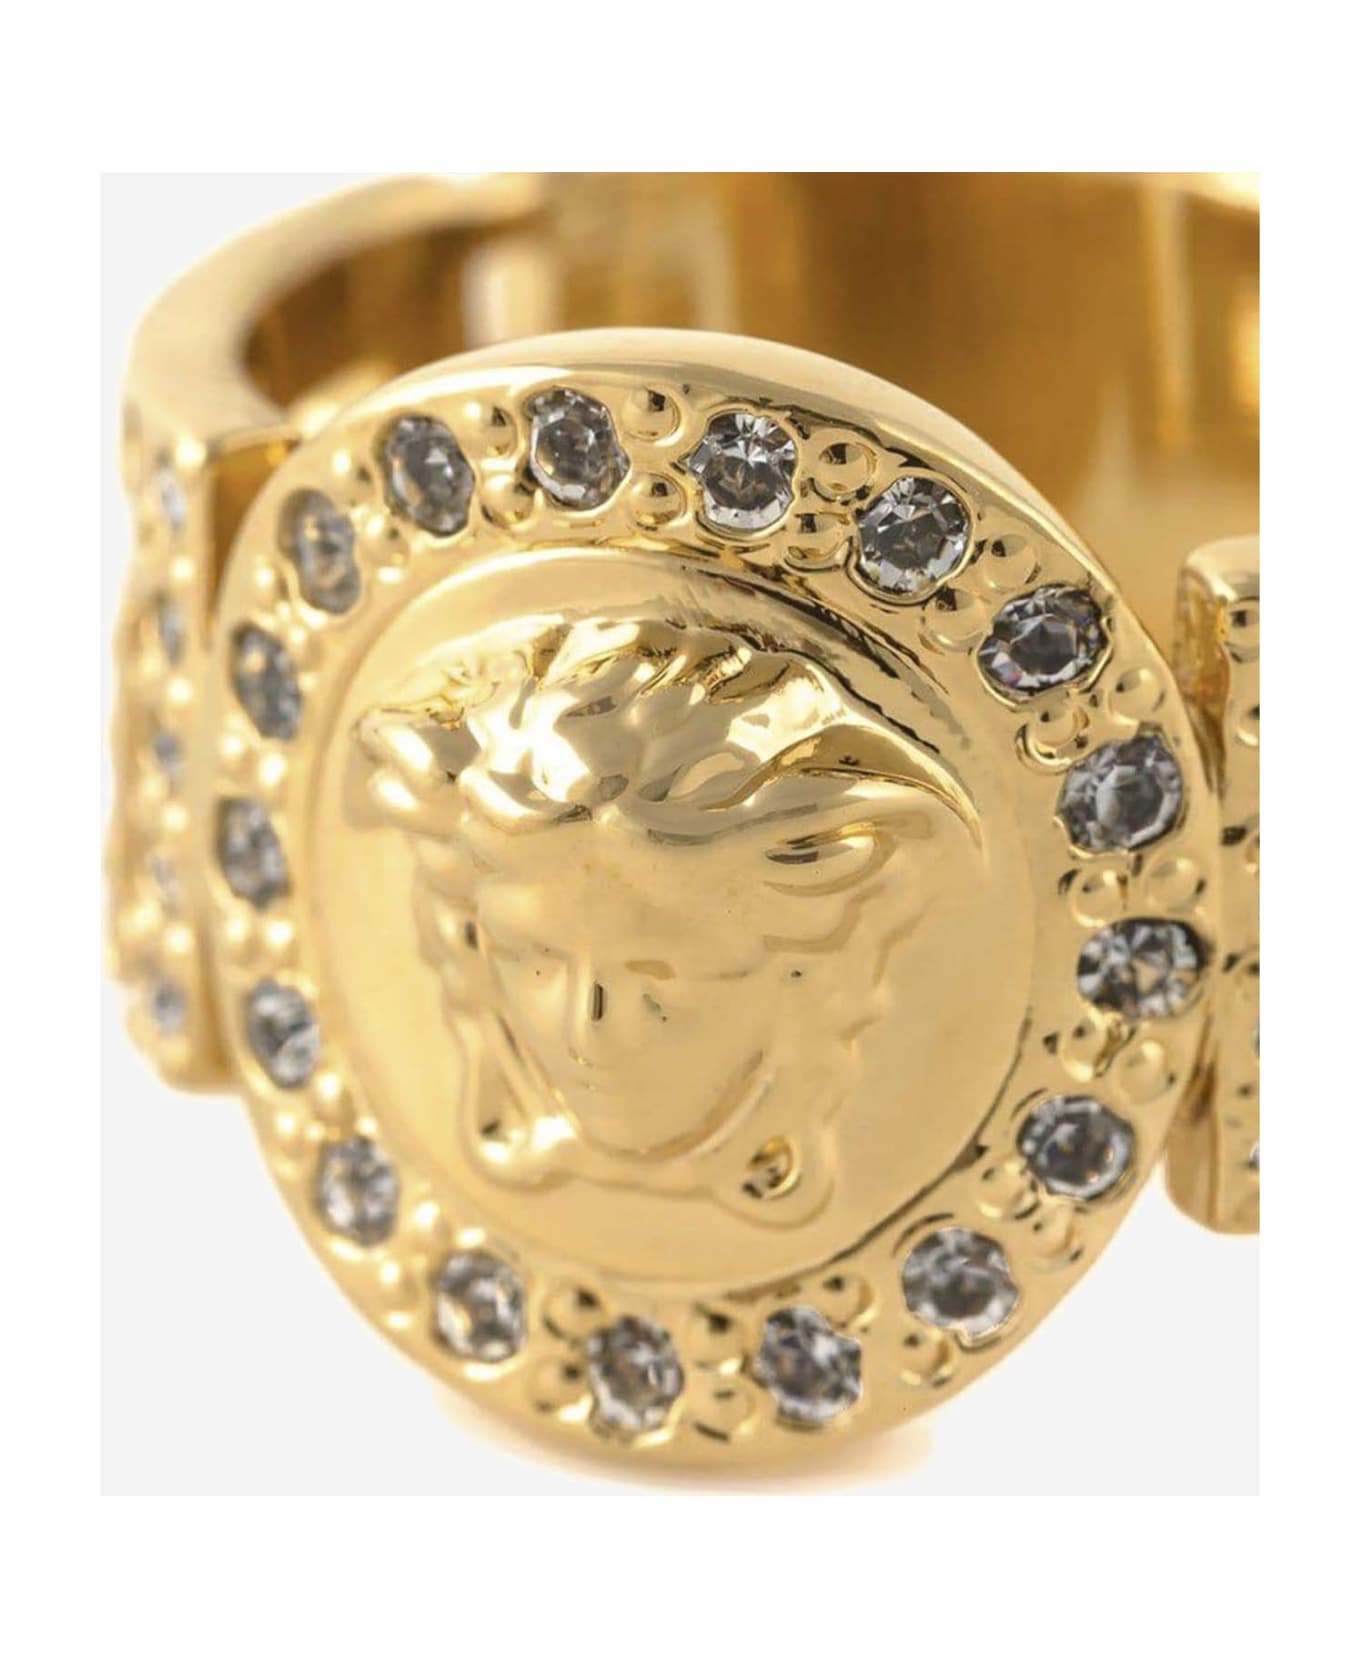 Versace La Medusa Ring With Crystals - Golden